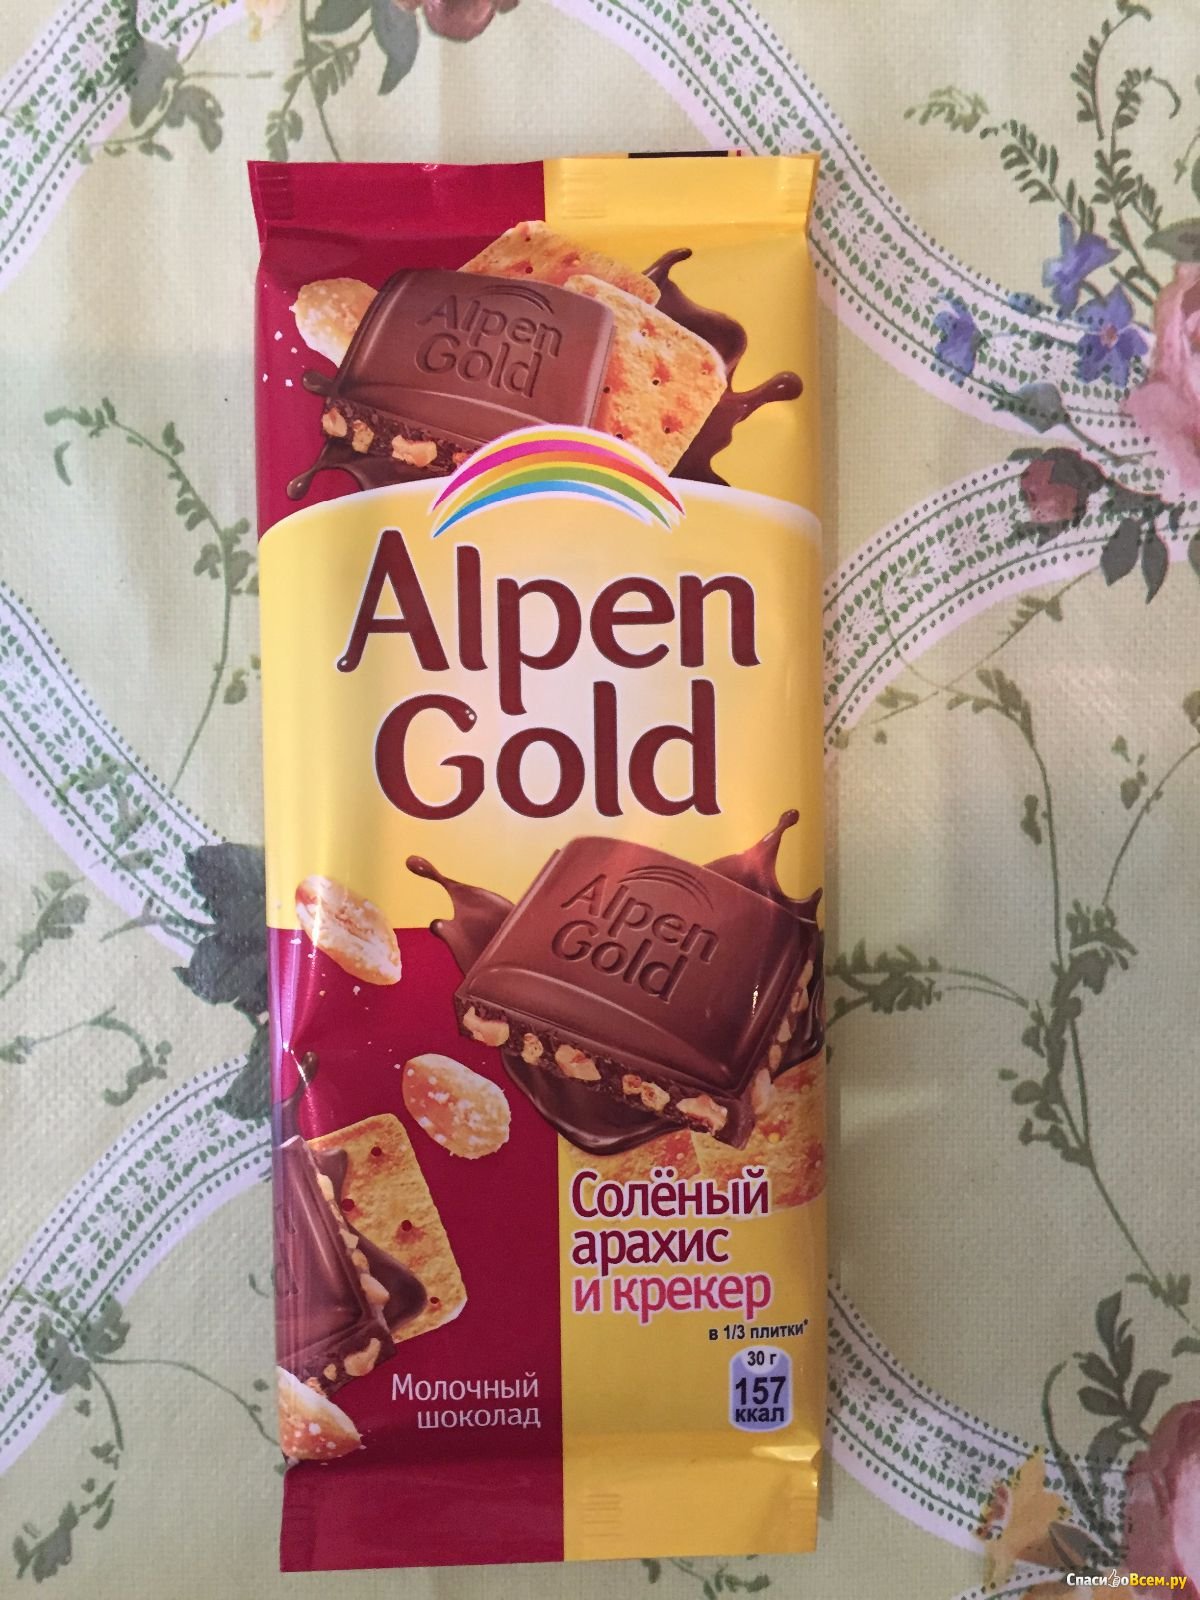 Анпенгольд шоколад. Шоколад Альпен Гольд. Вкусы шоколада Альпен Гольд. Alpen Gold шоколад вкусы. Шоколадки Альпен Гольд вкусы.